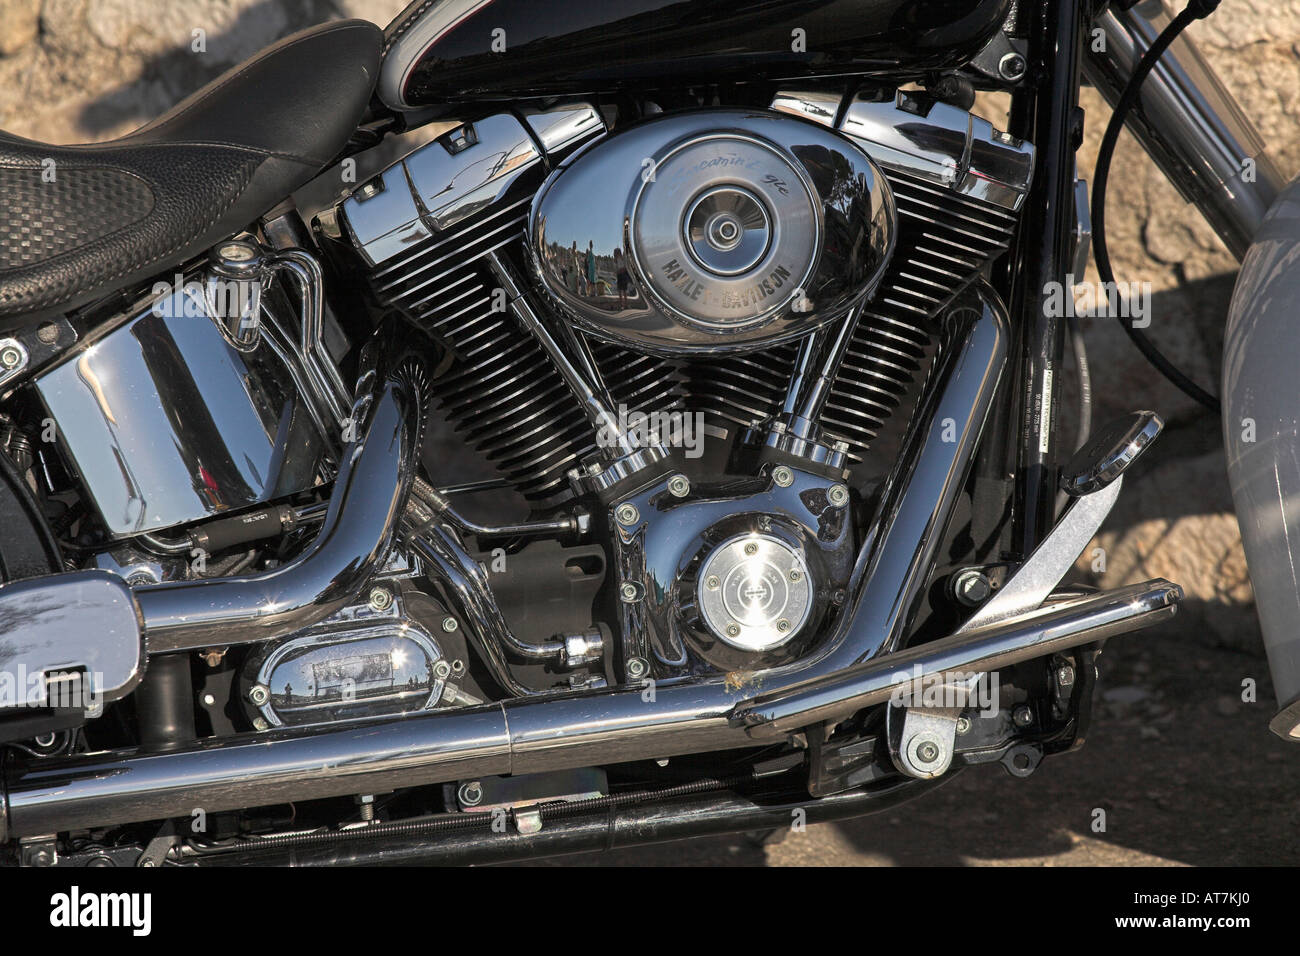 Stock Foto von Harley Davidson Motorrad Stockfoto